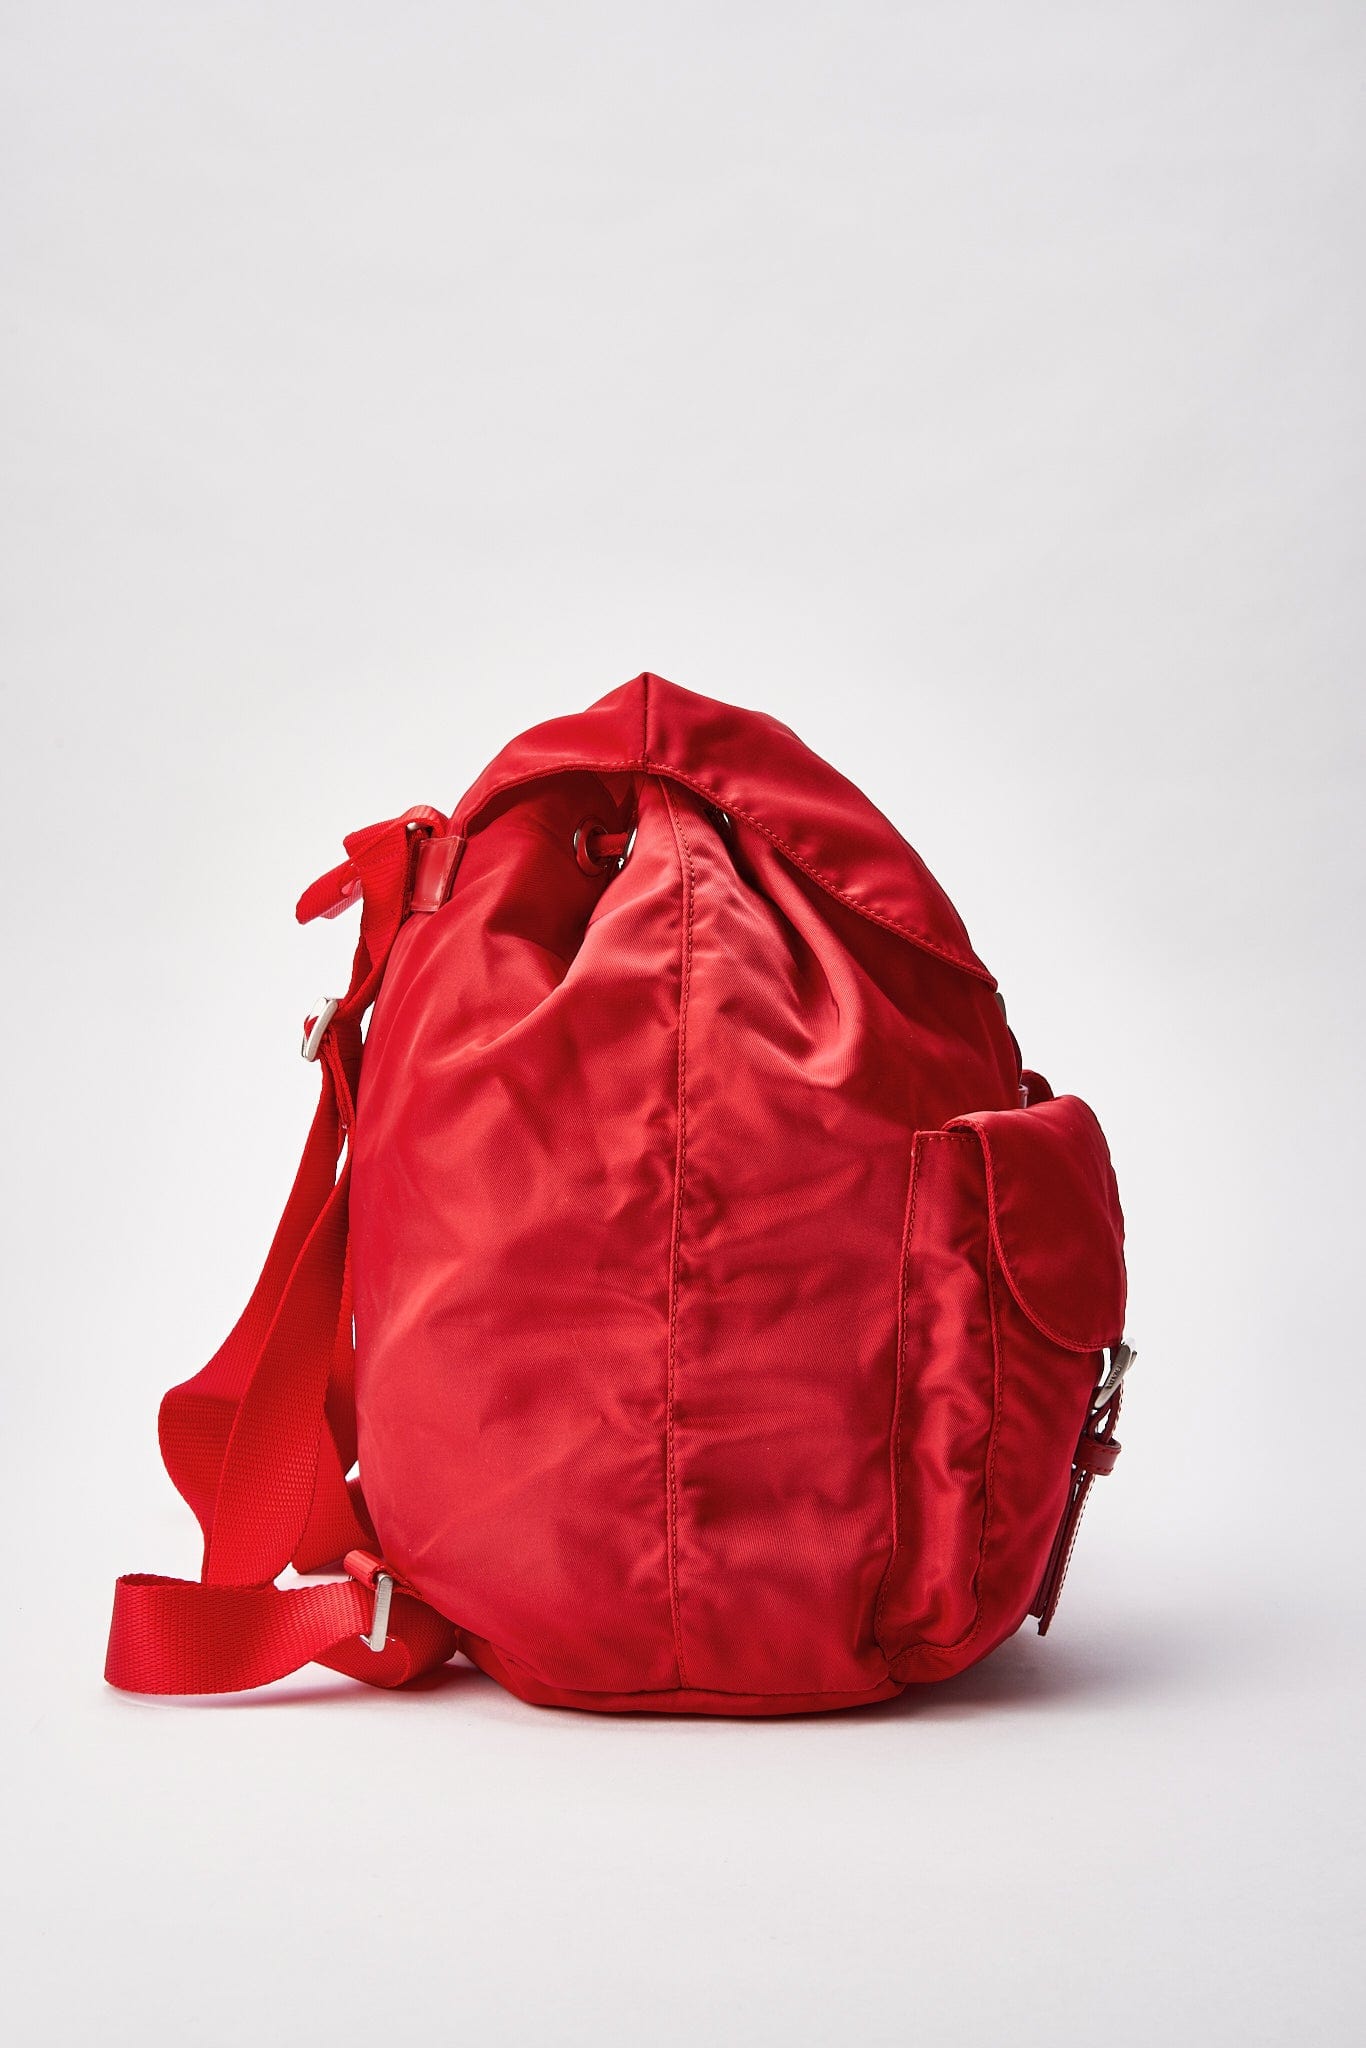 Prada Nylon Backpack - Red